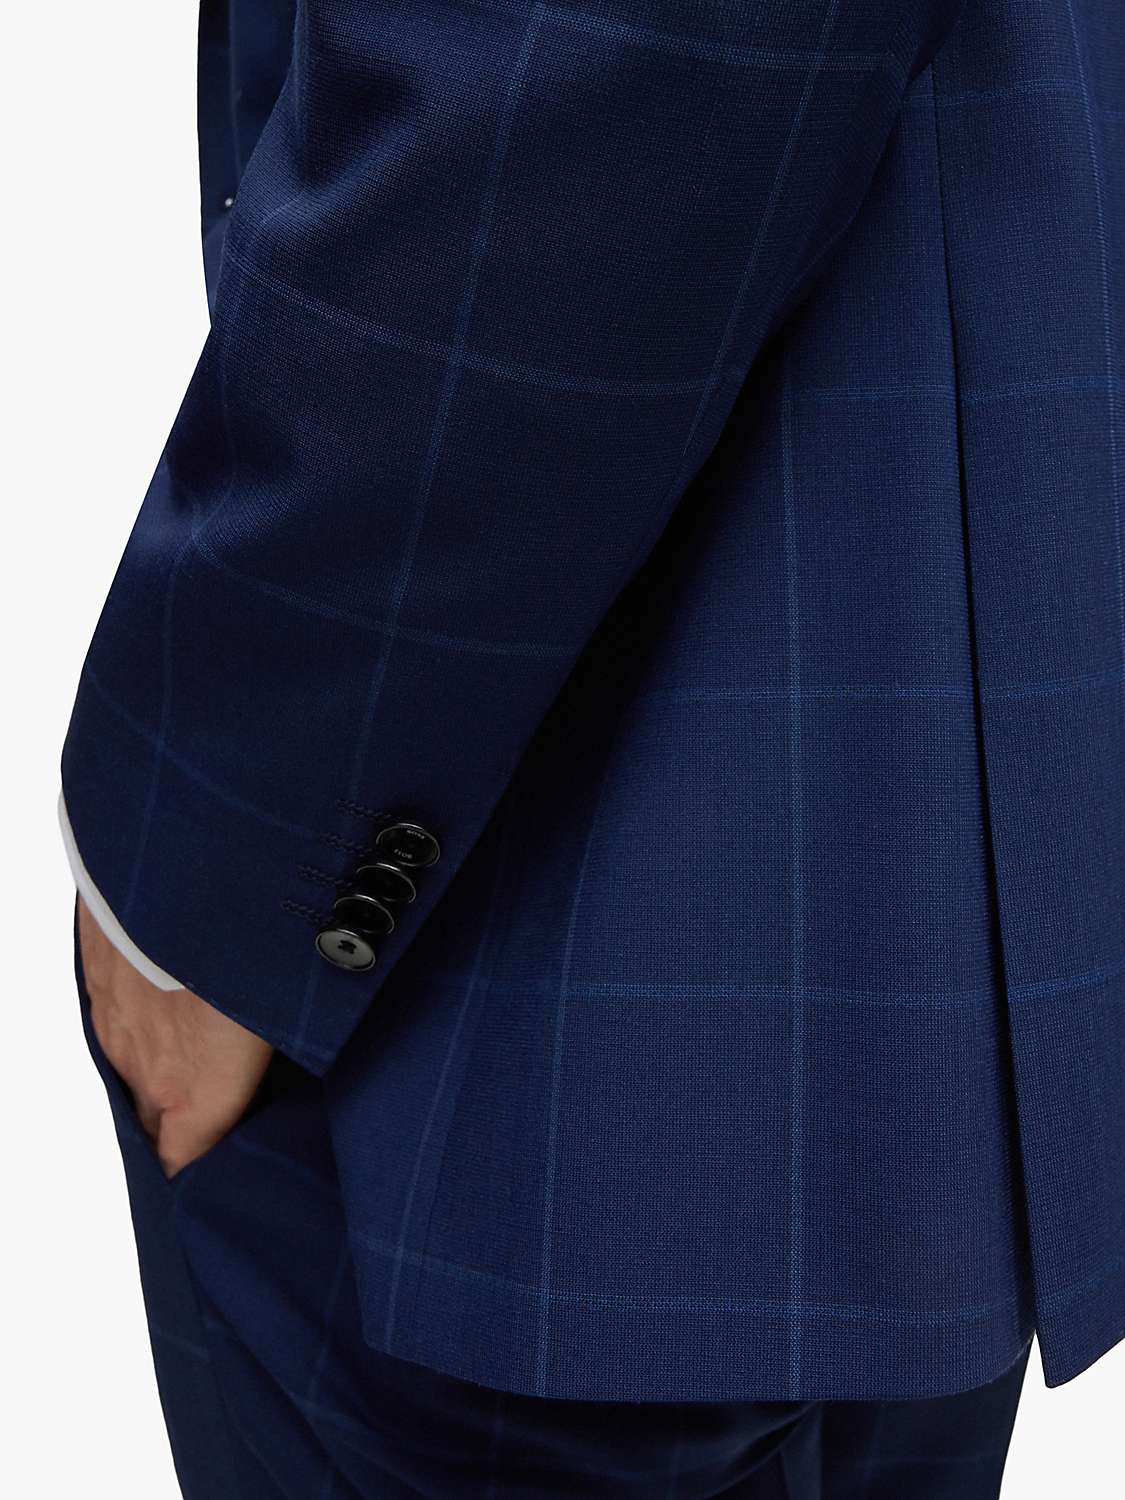 Buy BOSS H-Huge Slim Fit Suit Jacket, Dark Blue Online at johnlewis.com